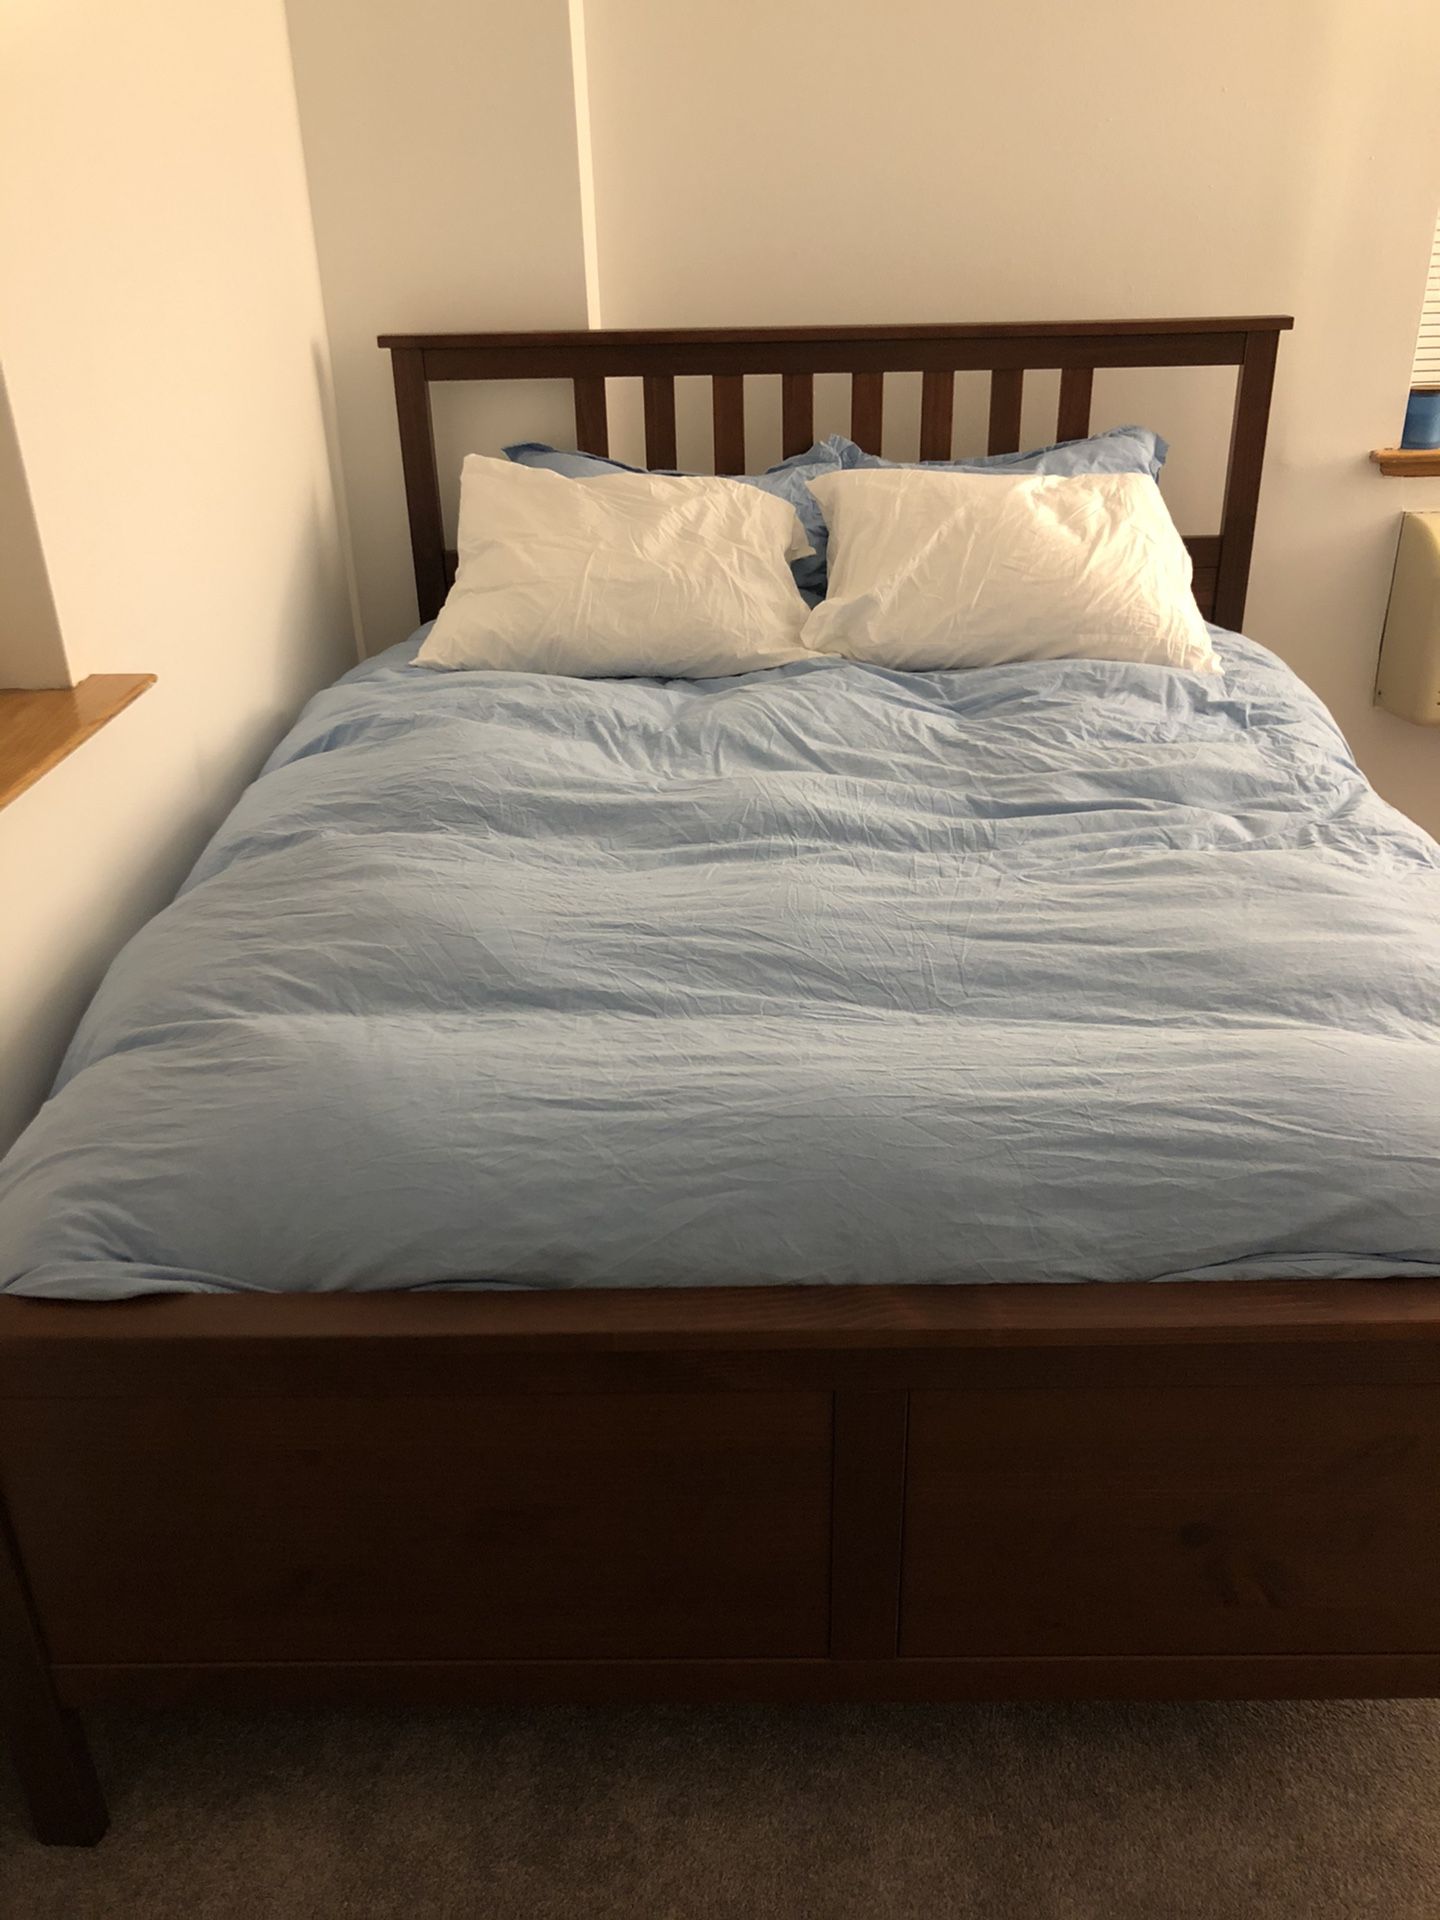 Ikea queen bed and mattress